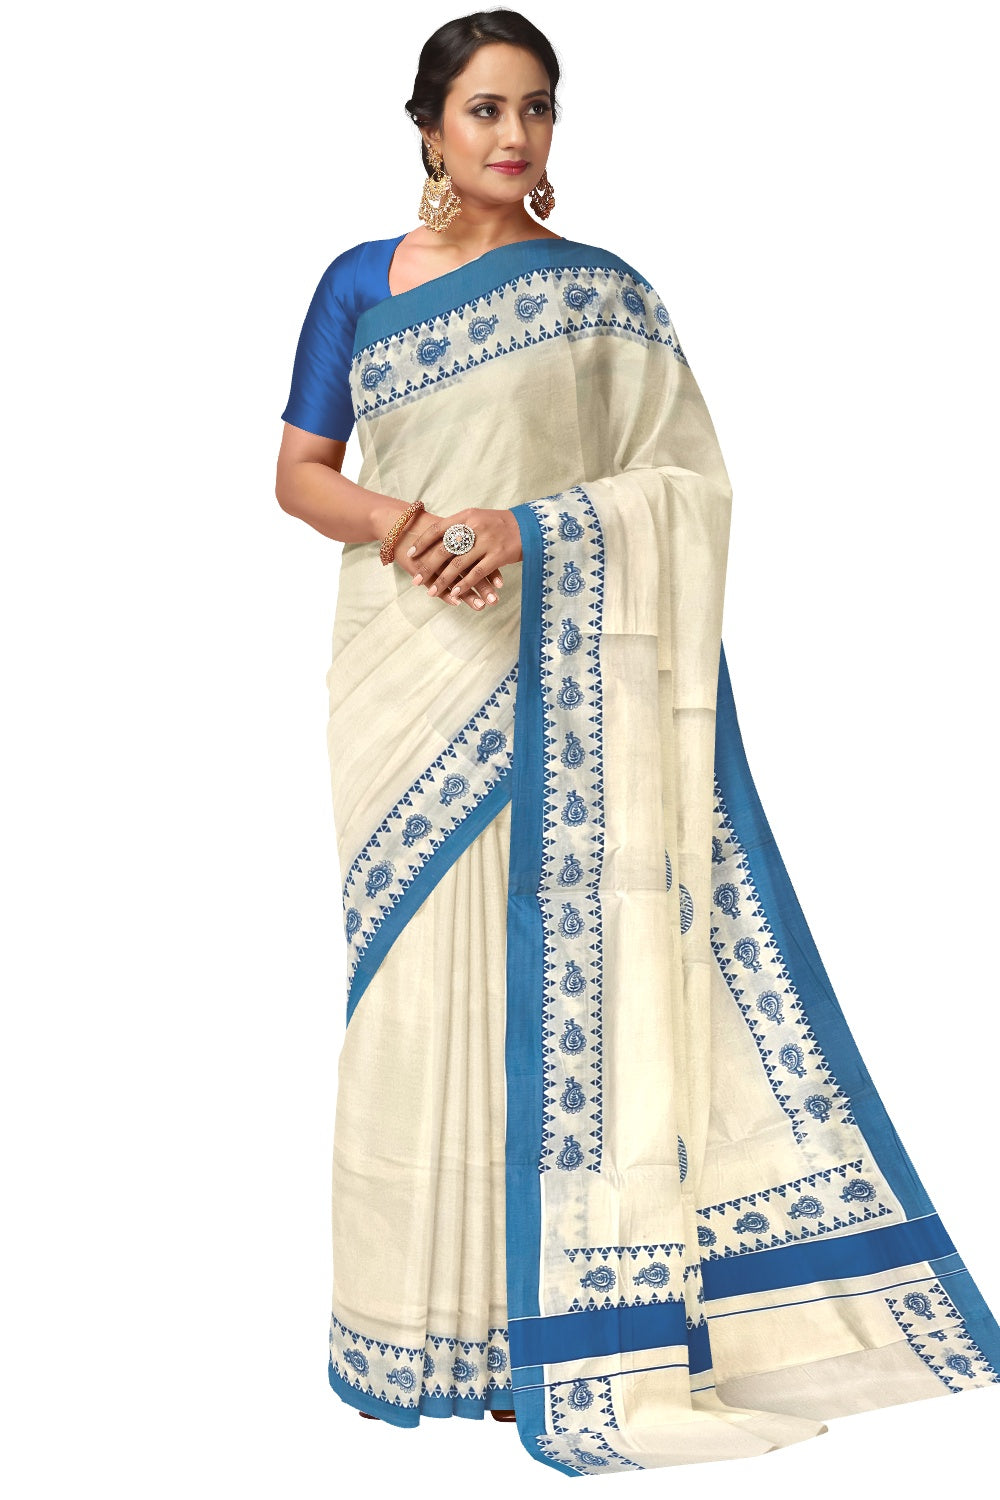 Pure Cotton Kerala Saree with Light Blue Paisley Block Printed Border